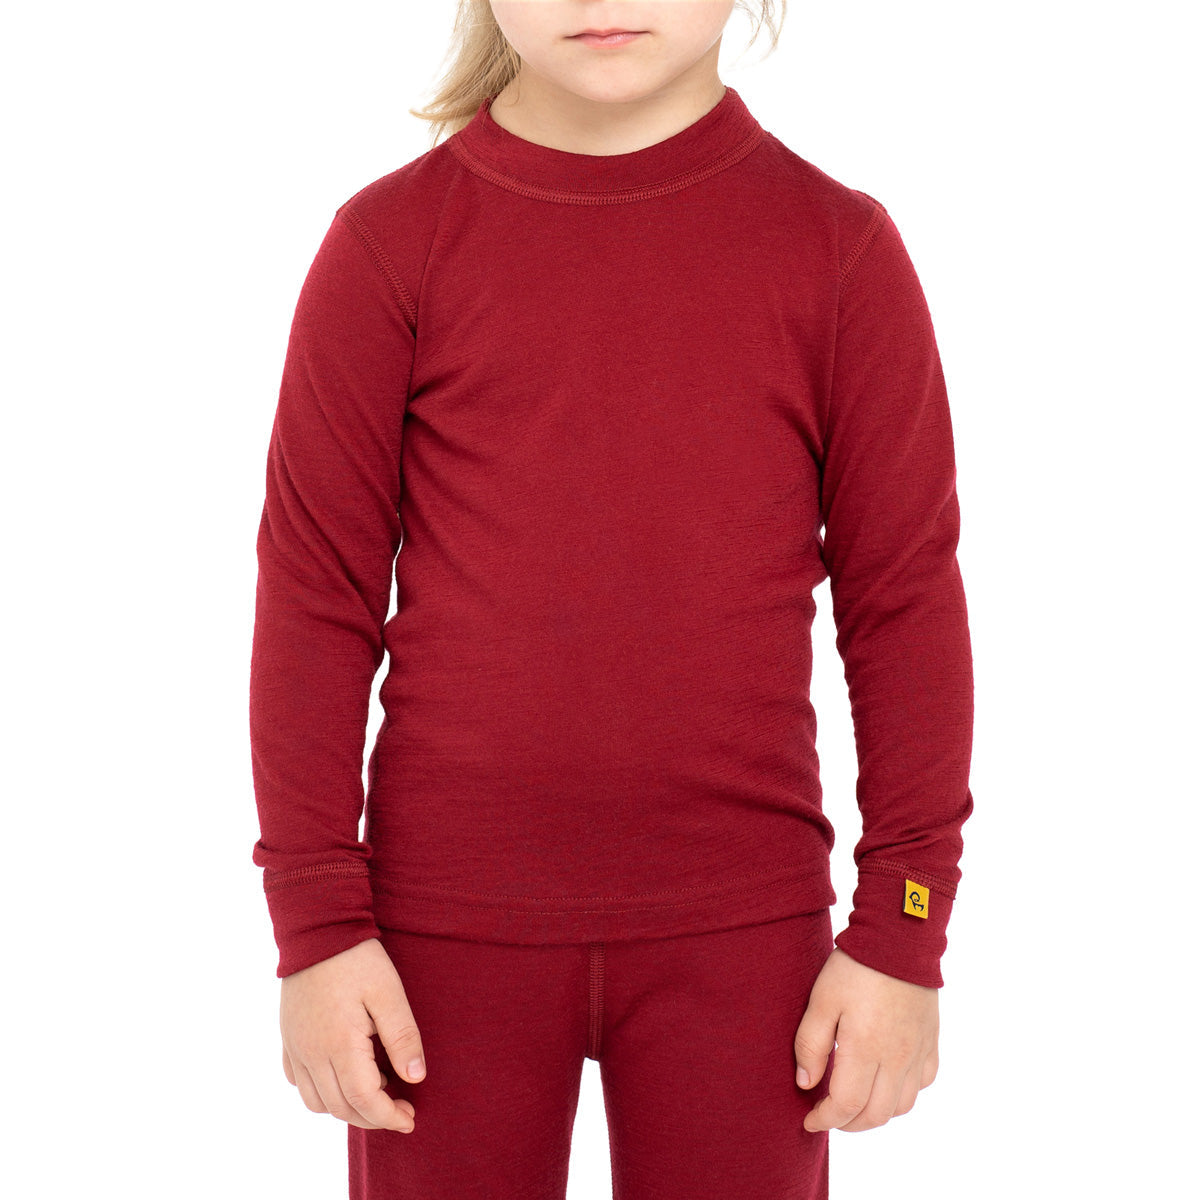 MENIQUE Long Sleeve Crew 100% Merino Wool Kids Shirt Royal Cherry